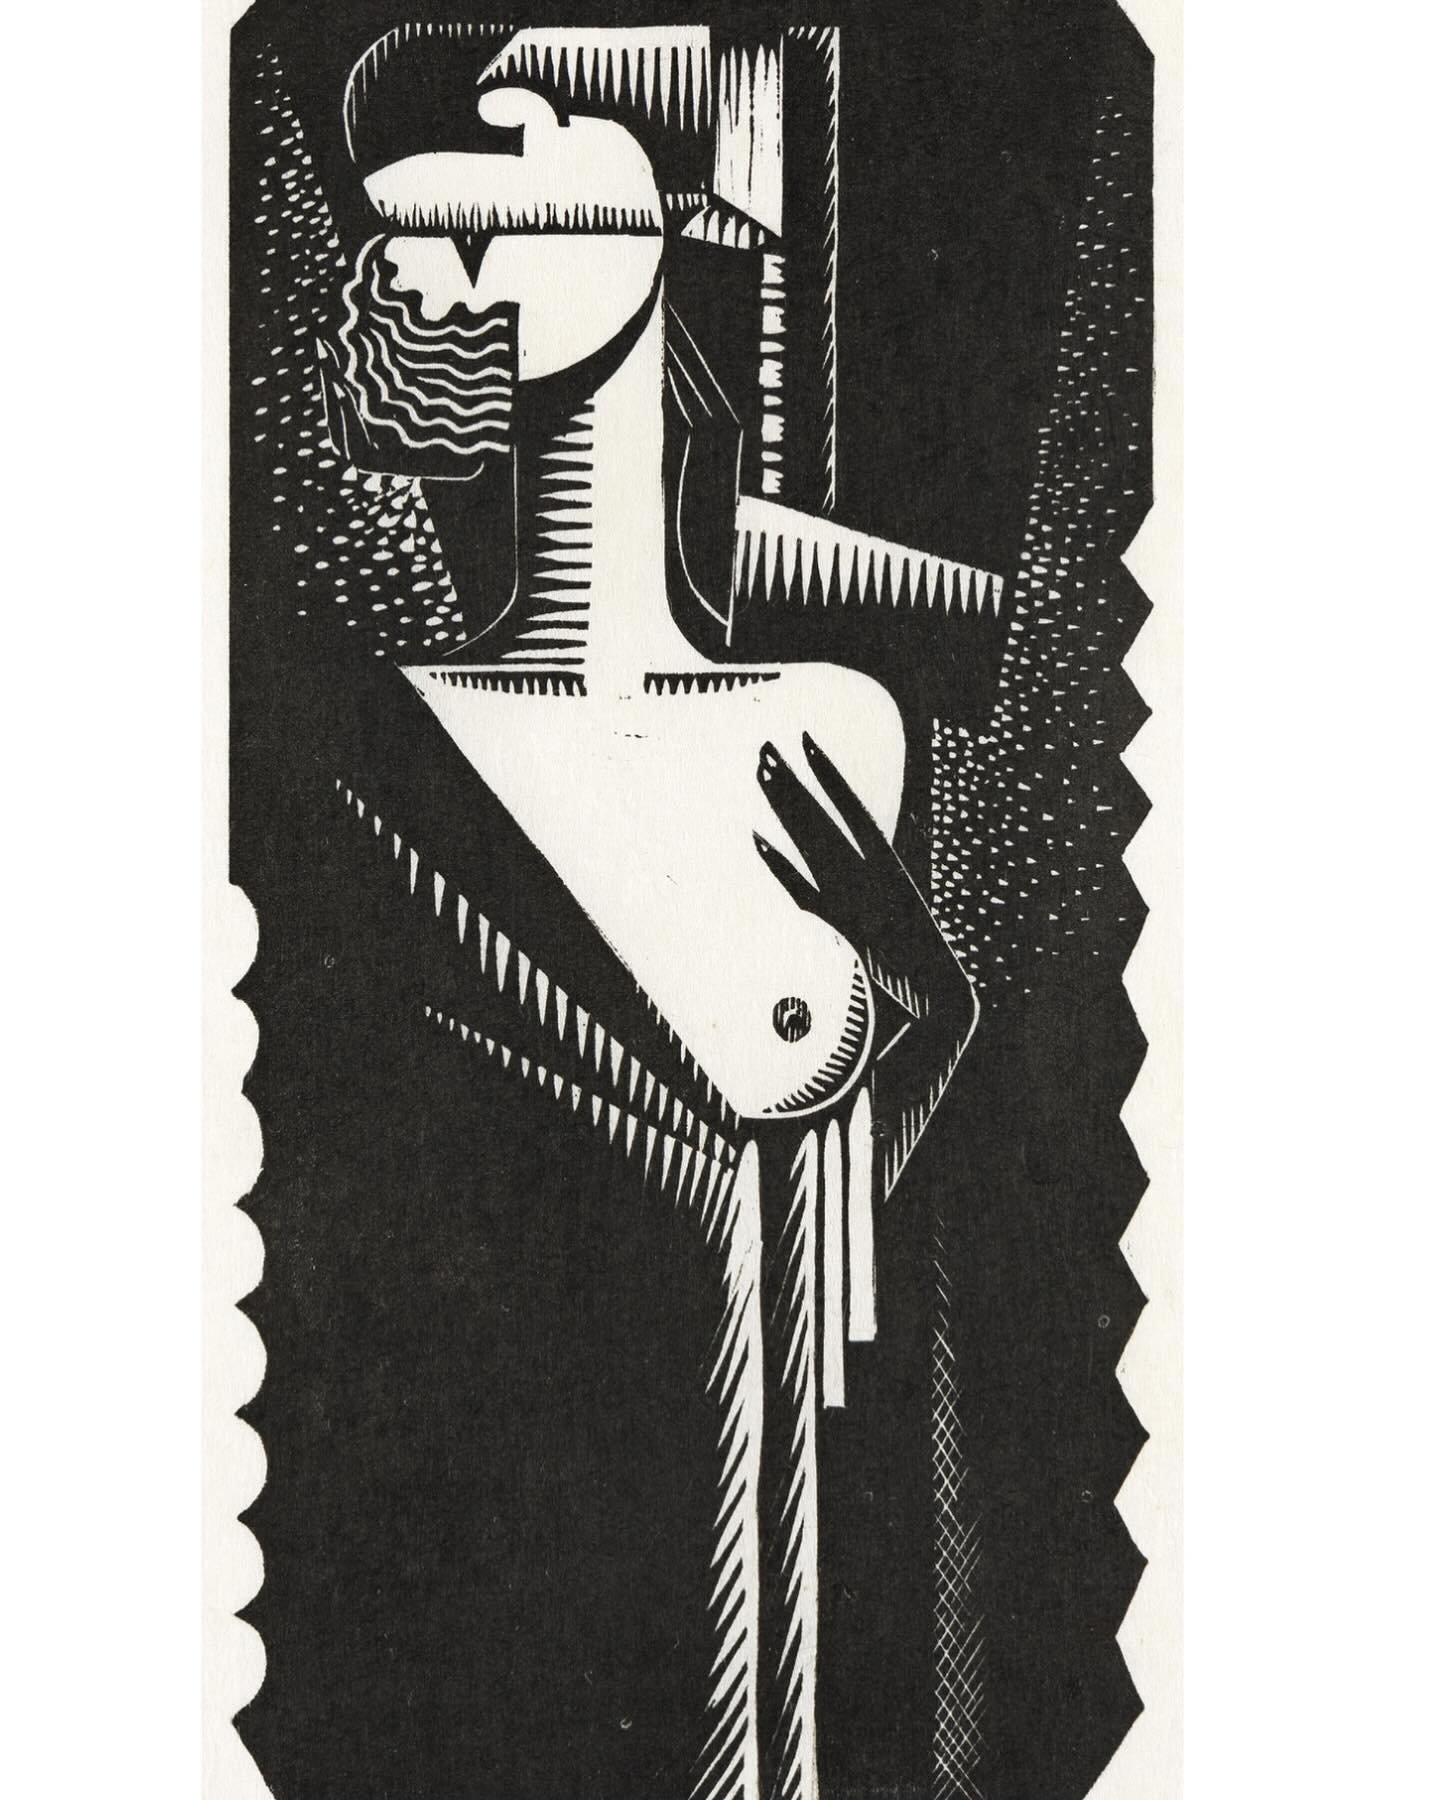 Charles Turzak, The Kiss, 1932, Estimate: $1,500-2,500. Let&rsquo;s bid!